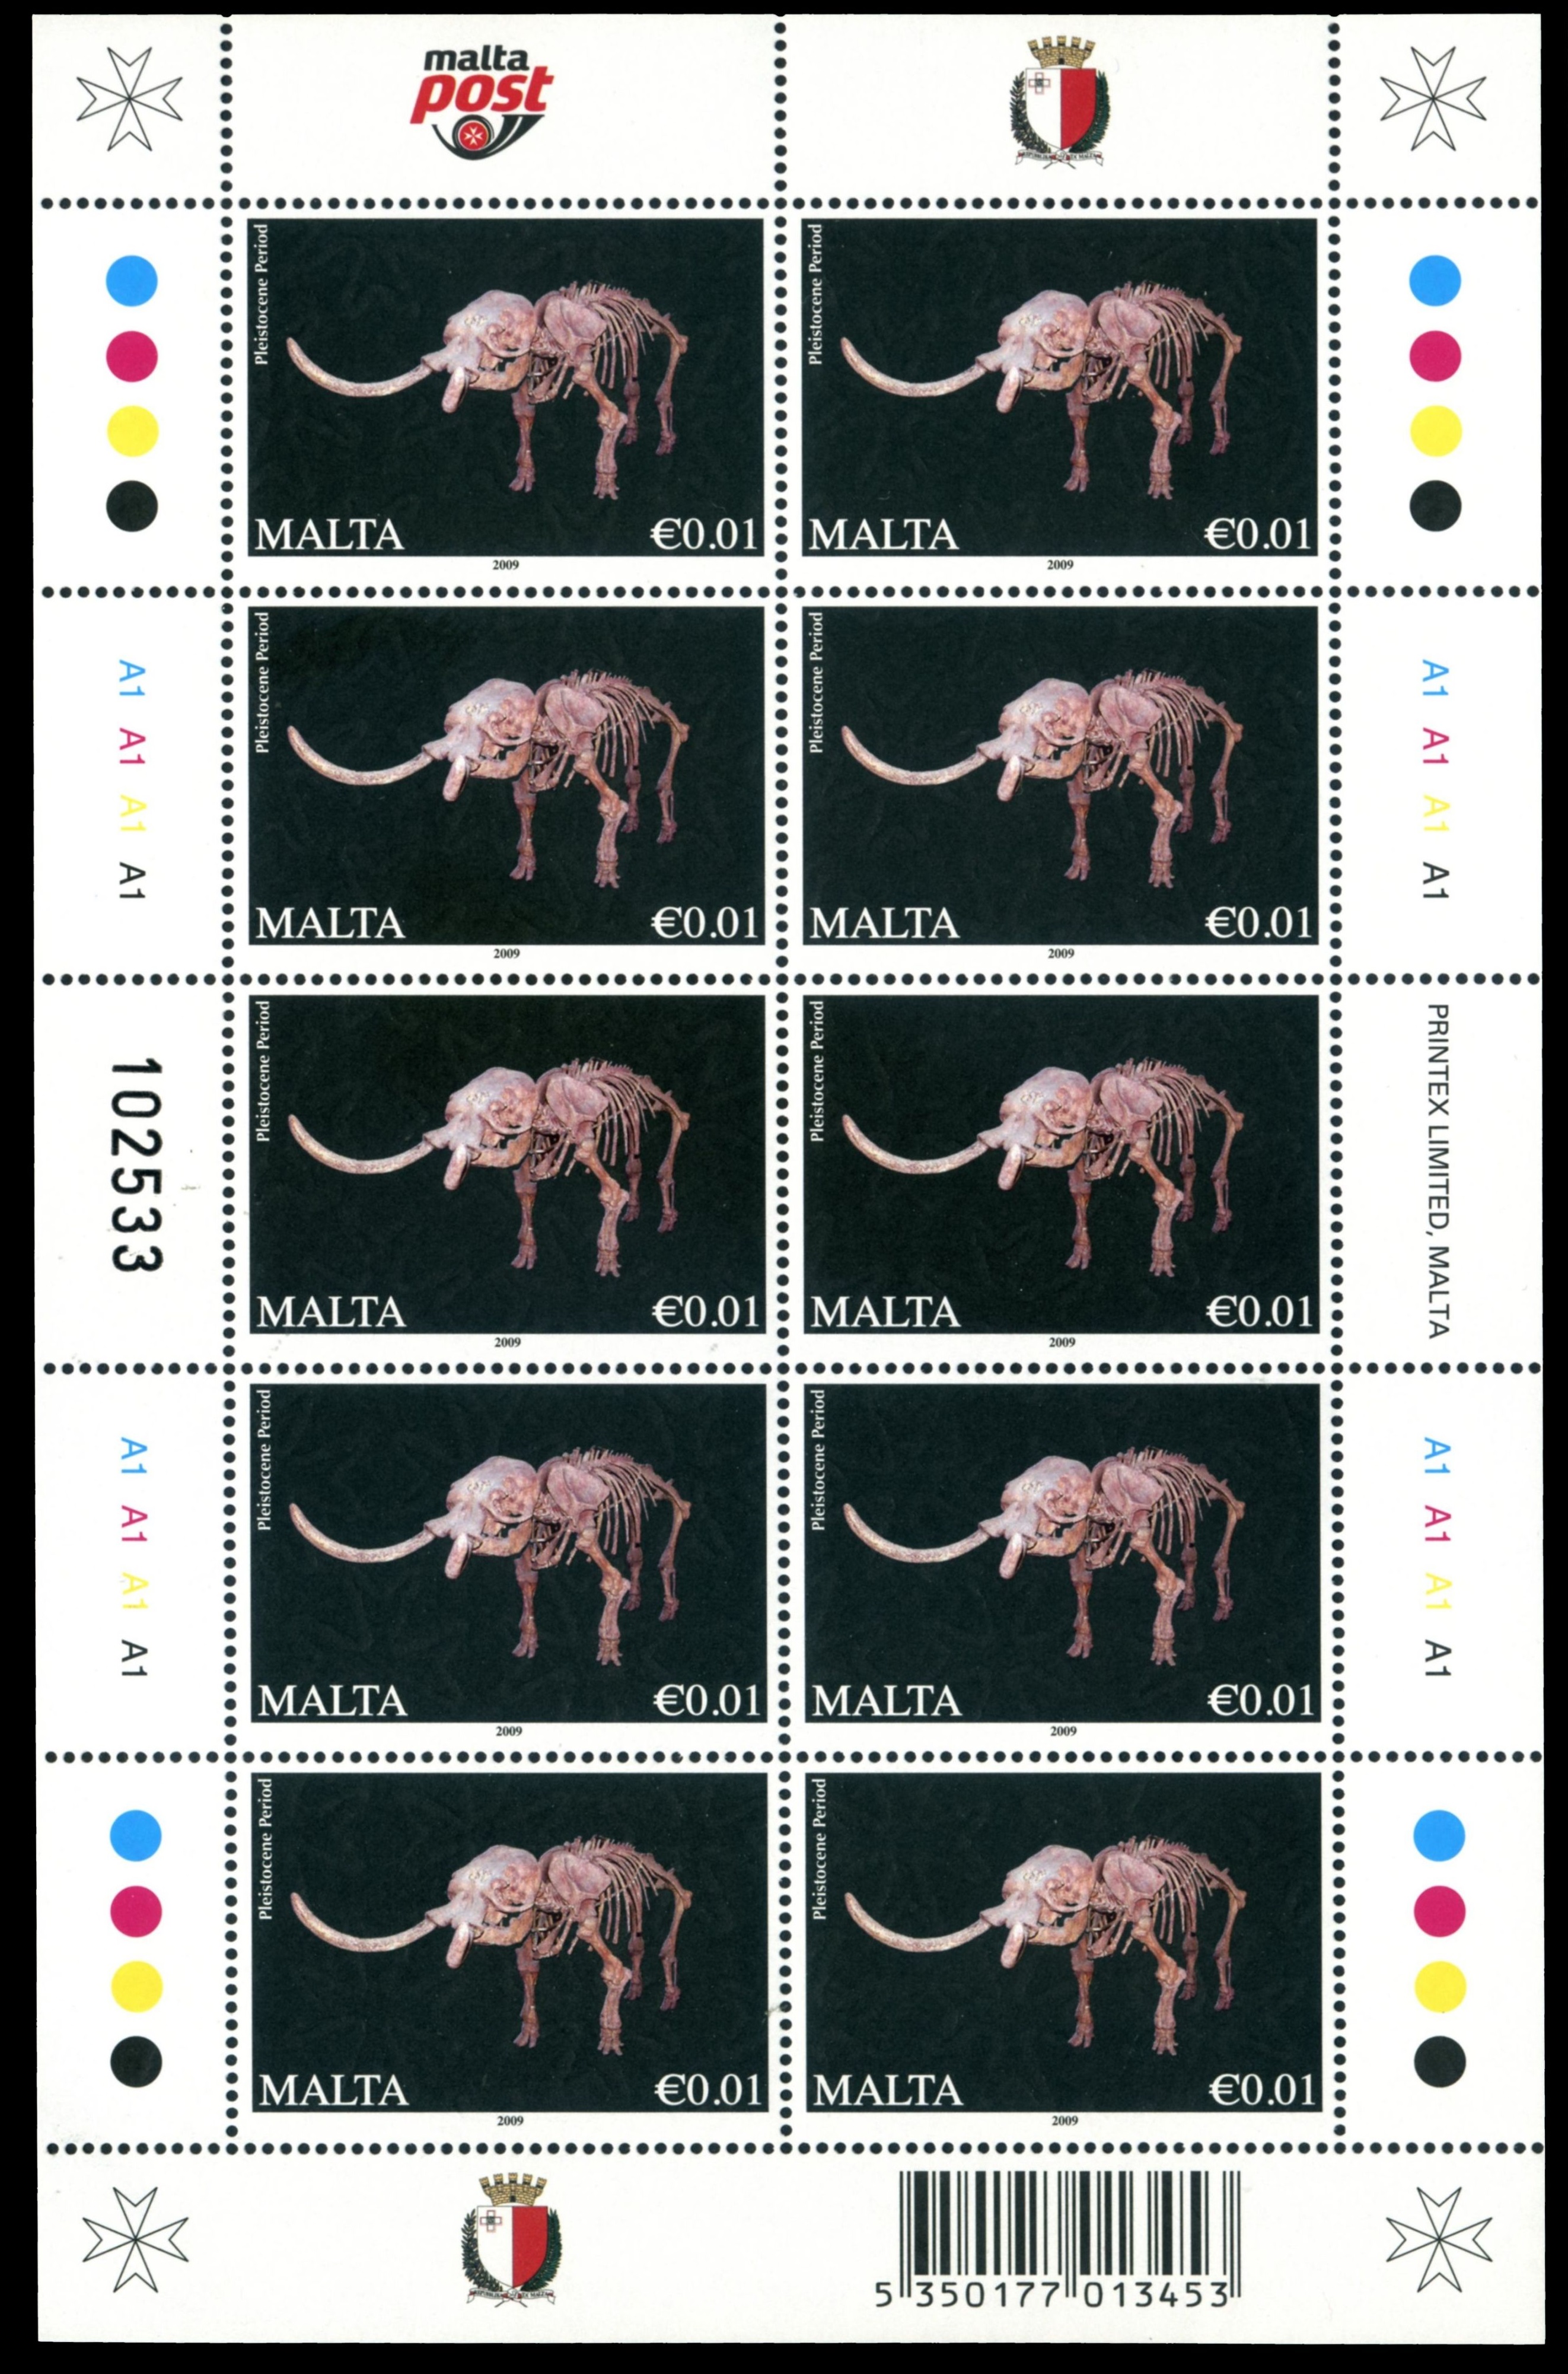  - Malta 2009 - reprint of Fossil stamp